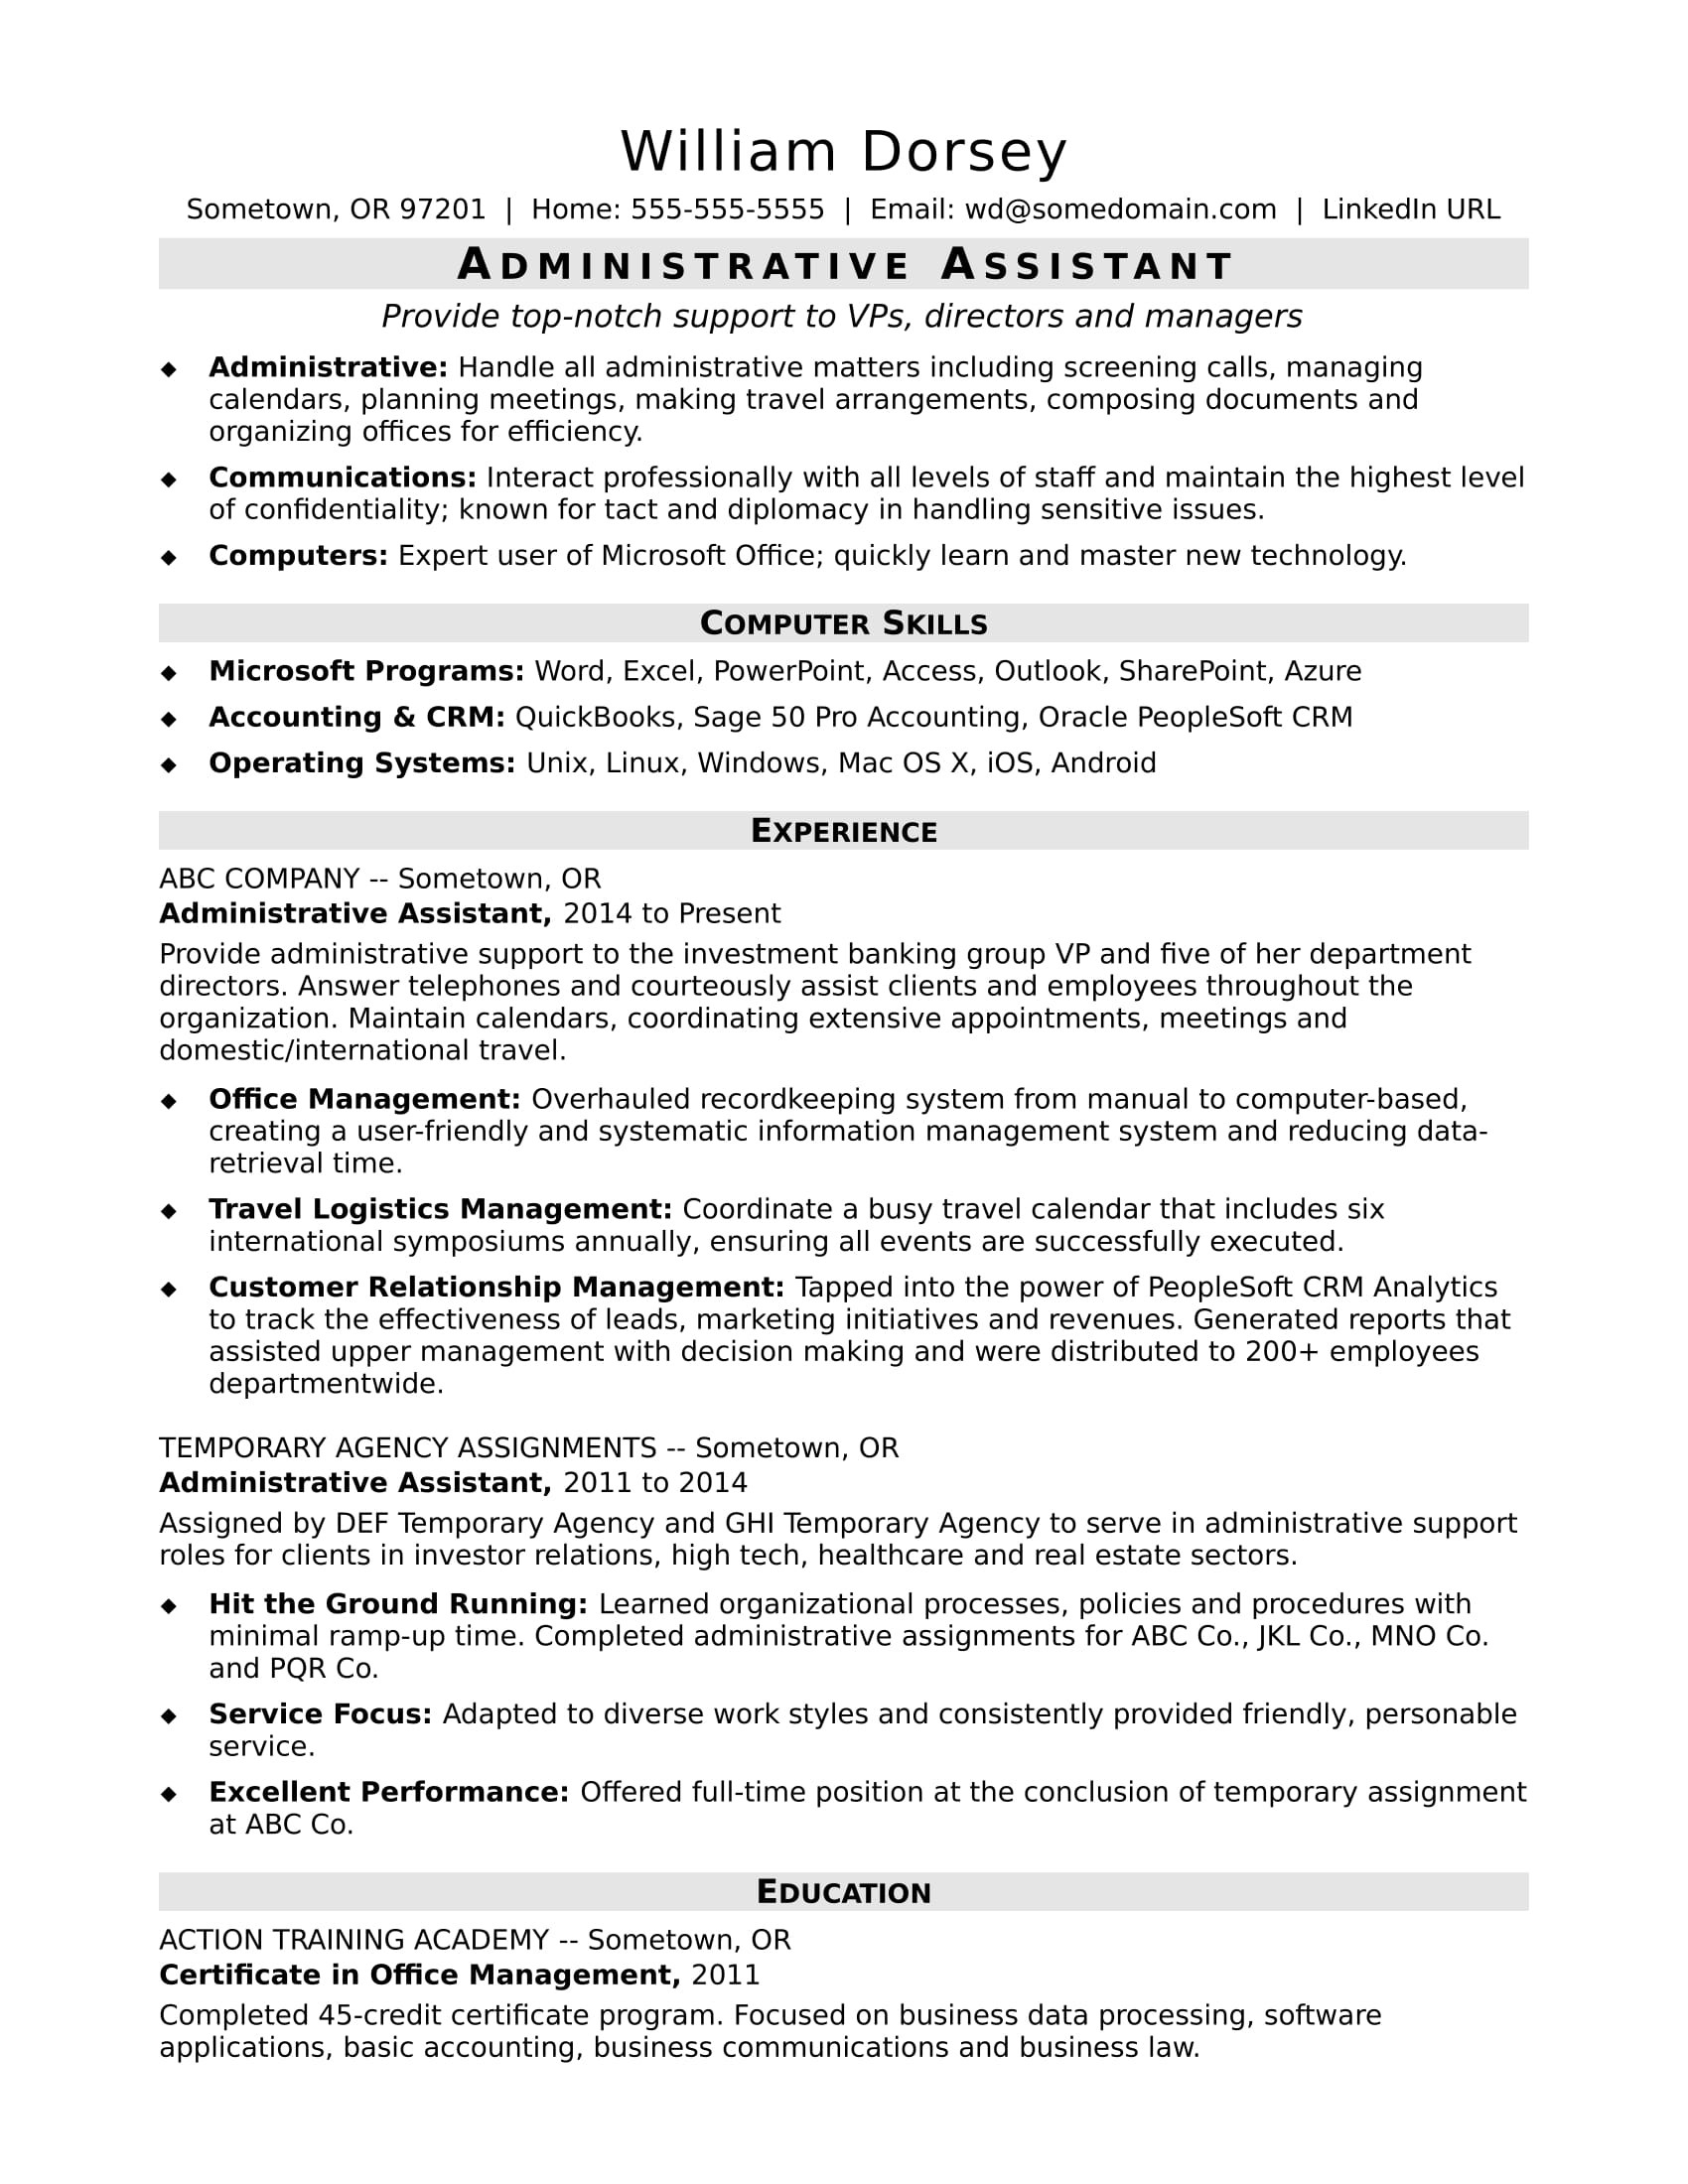 Sample Resume for Program Administrator Manufacturing Administrative assistant Resume Sample Monster.com